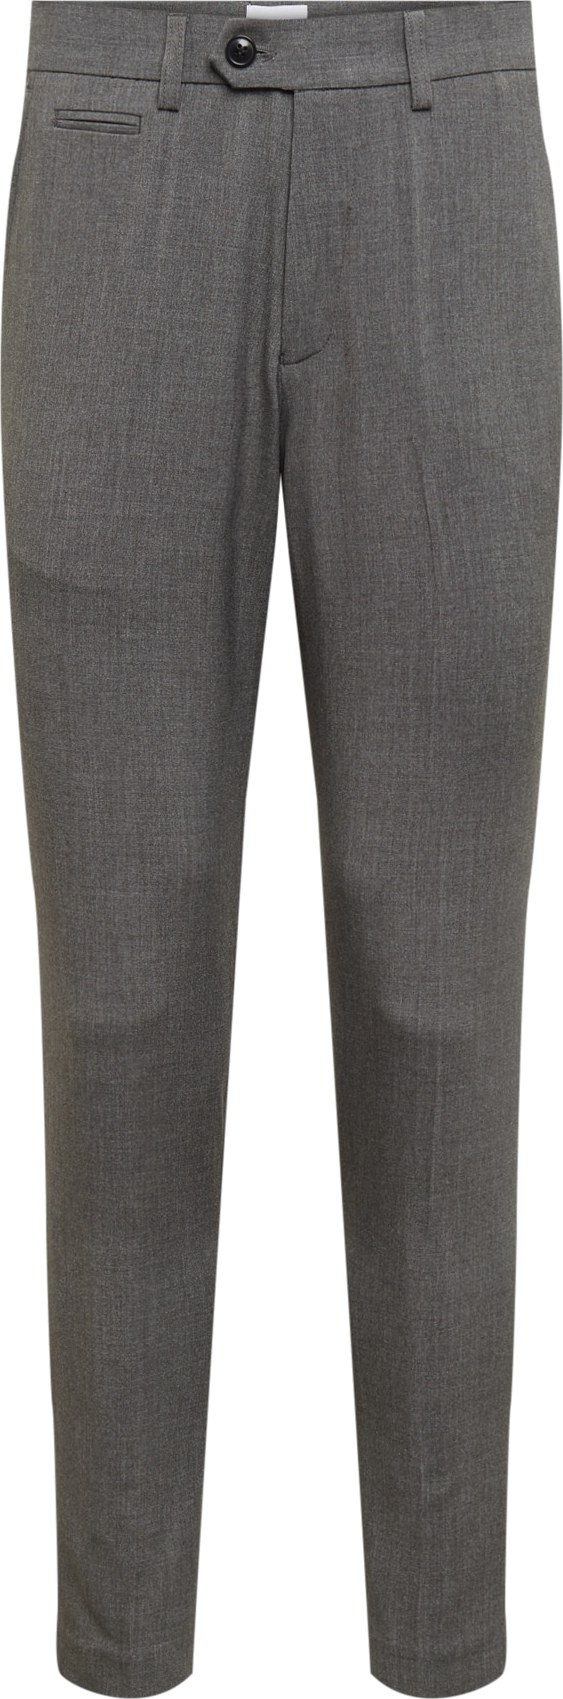 Kalhoty s puky 'Club pants' lindbergh šedá